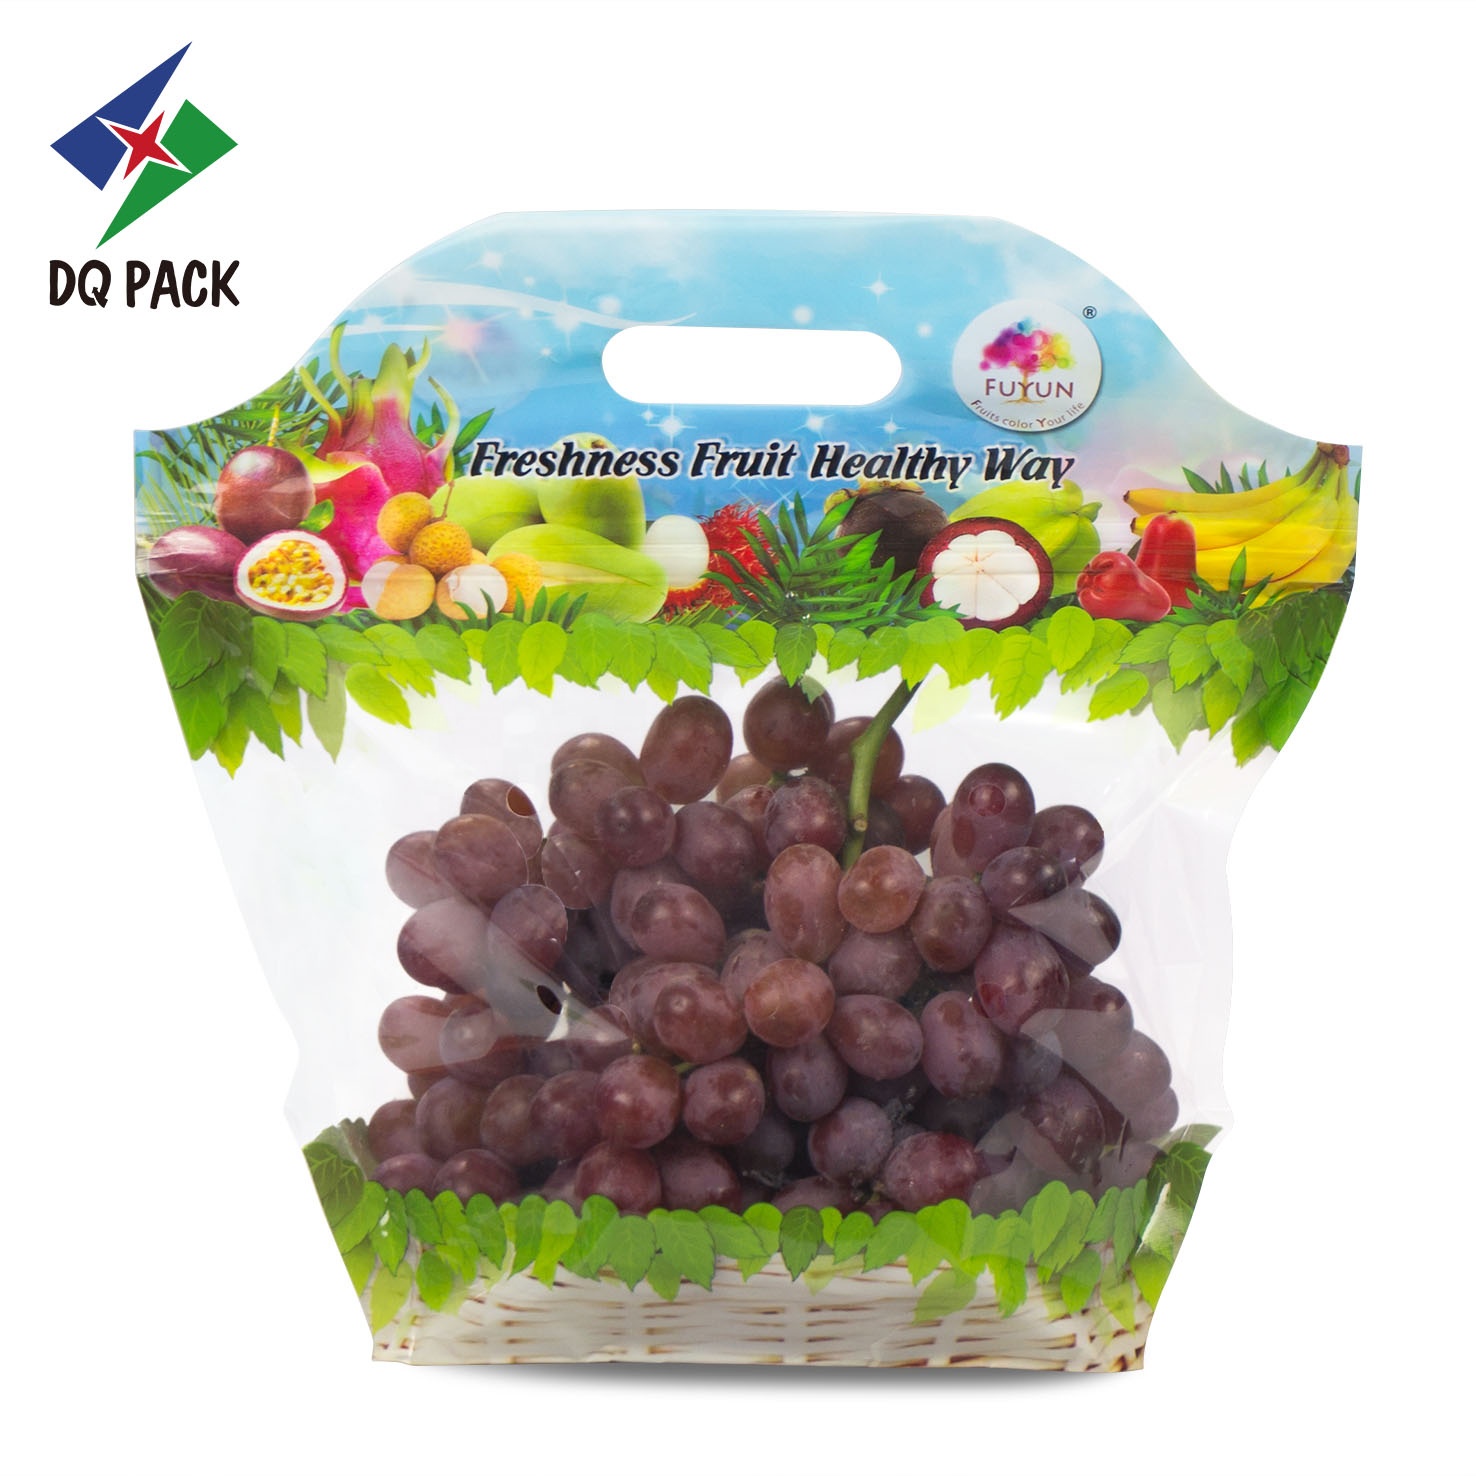 Fruit protection vented fresgness bag for grape